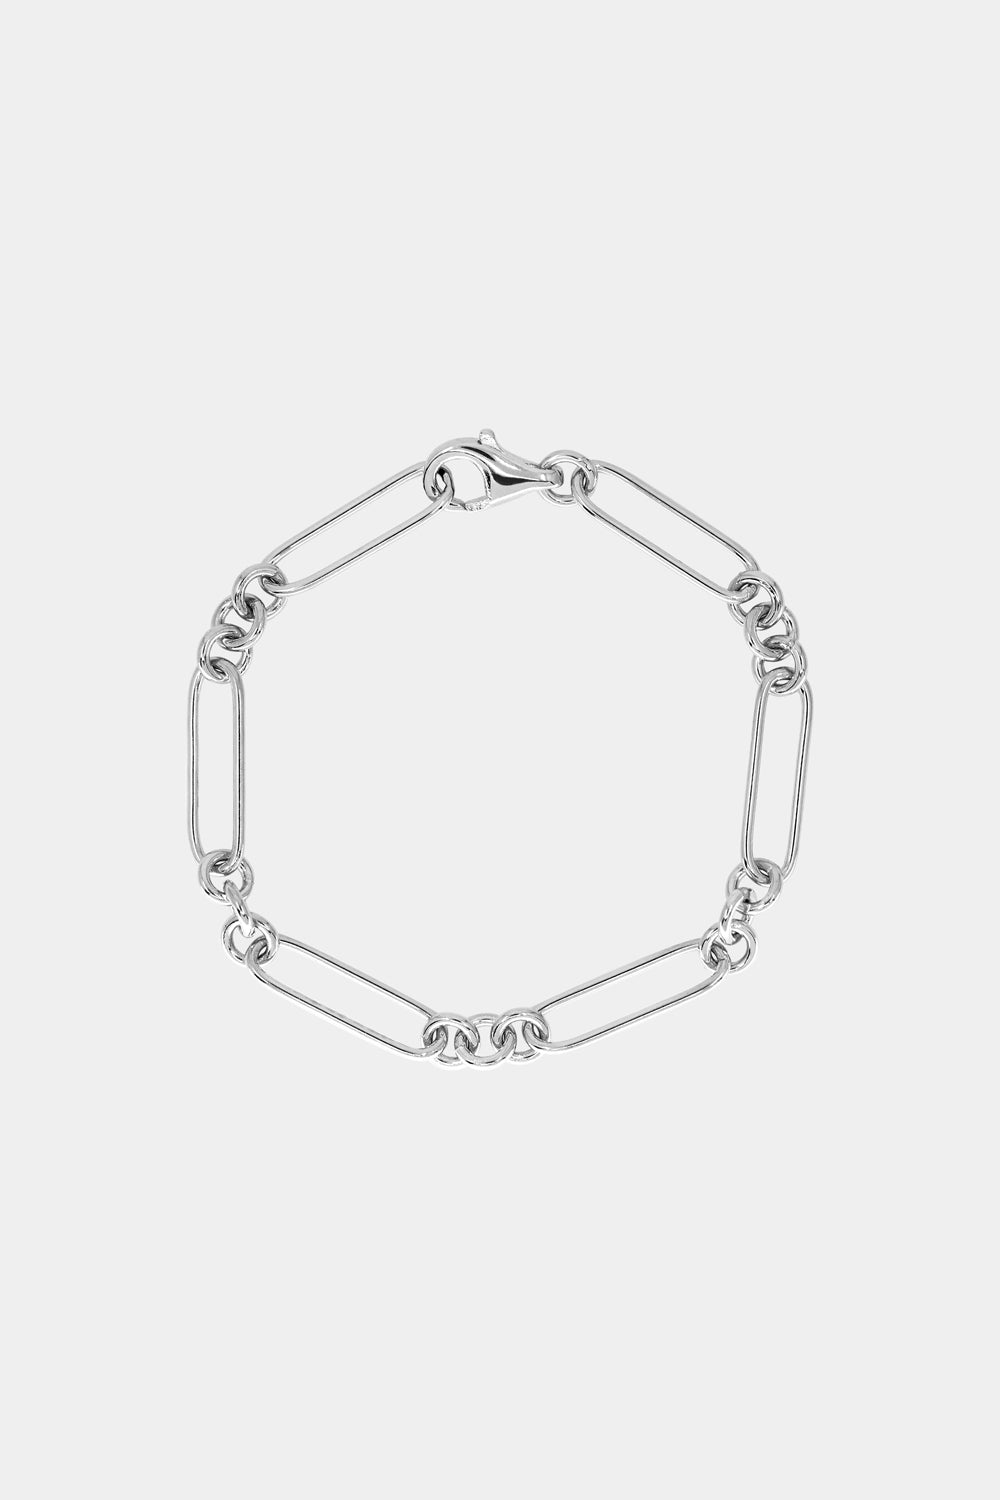 Lennox Bracelet | Silver or 9K White Gold, More Options Available